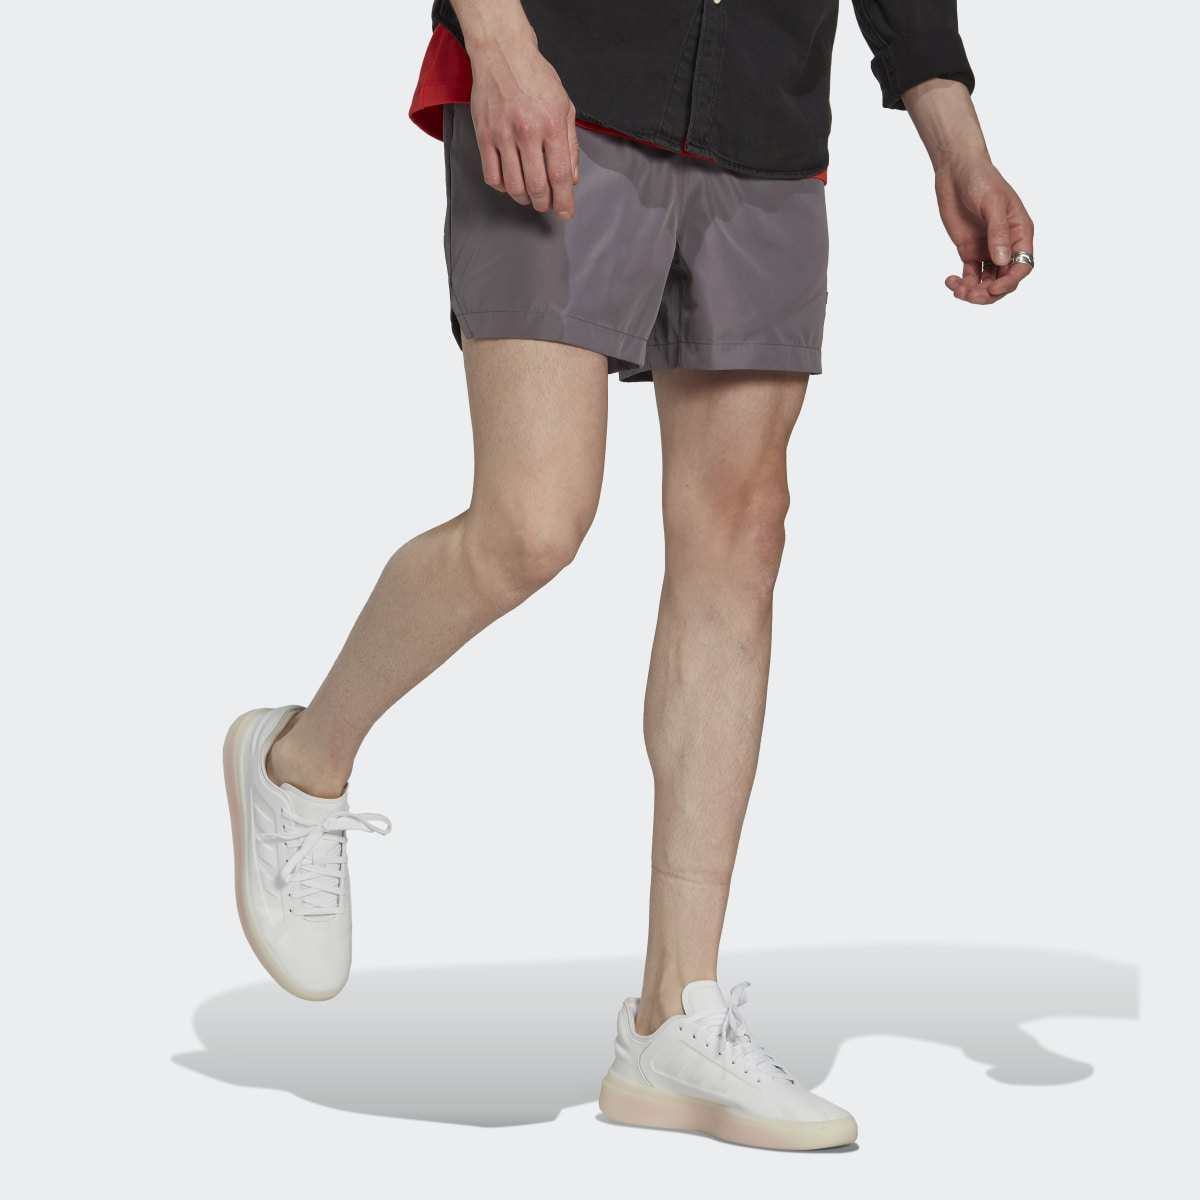 Adidas Tech Shorts. 4